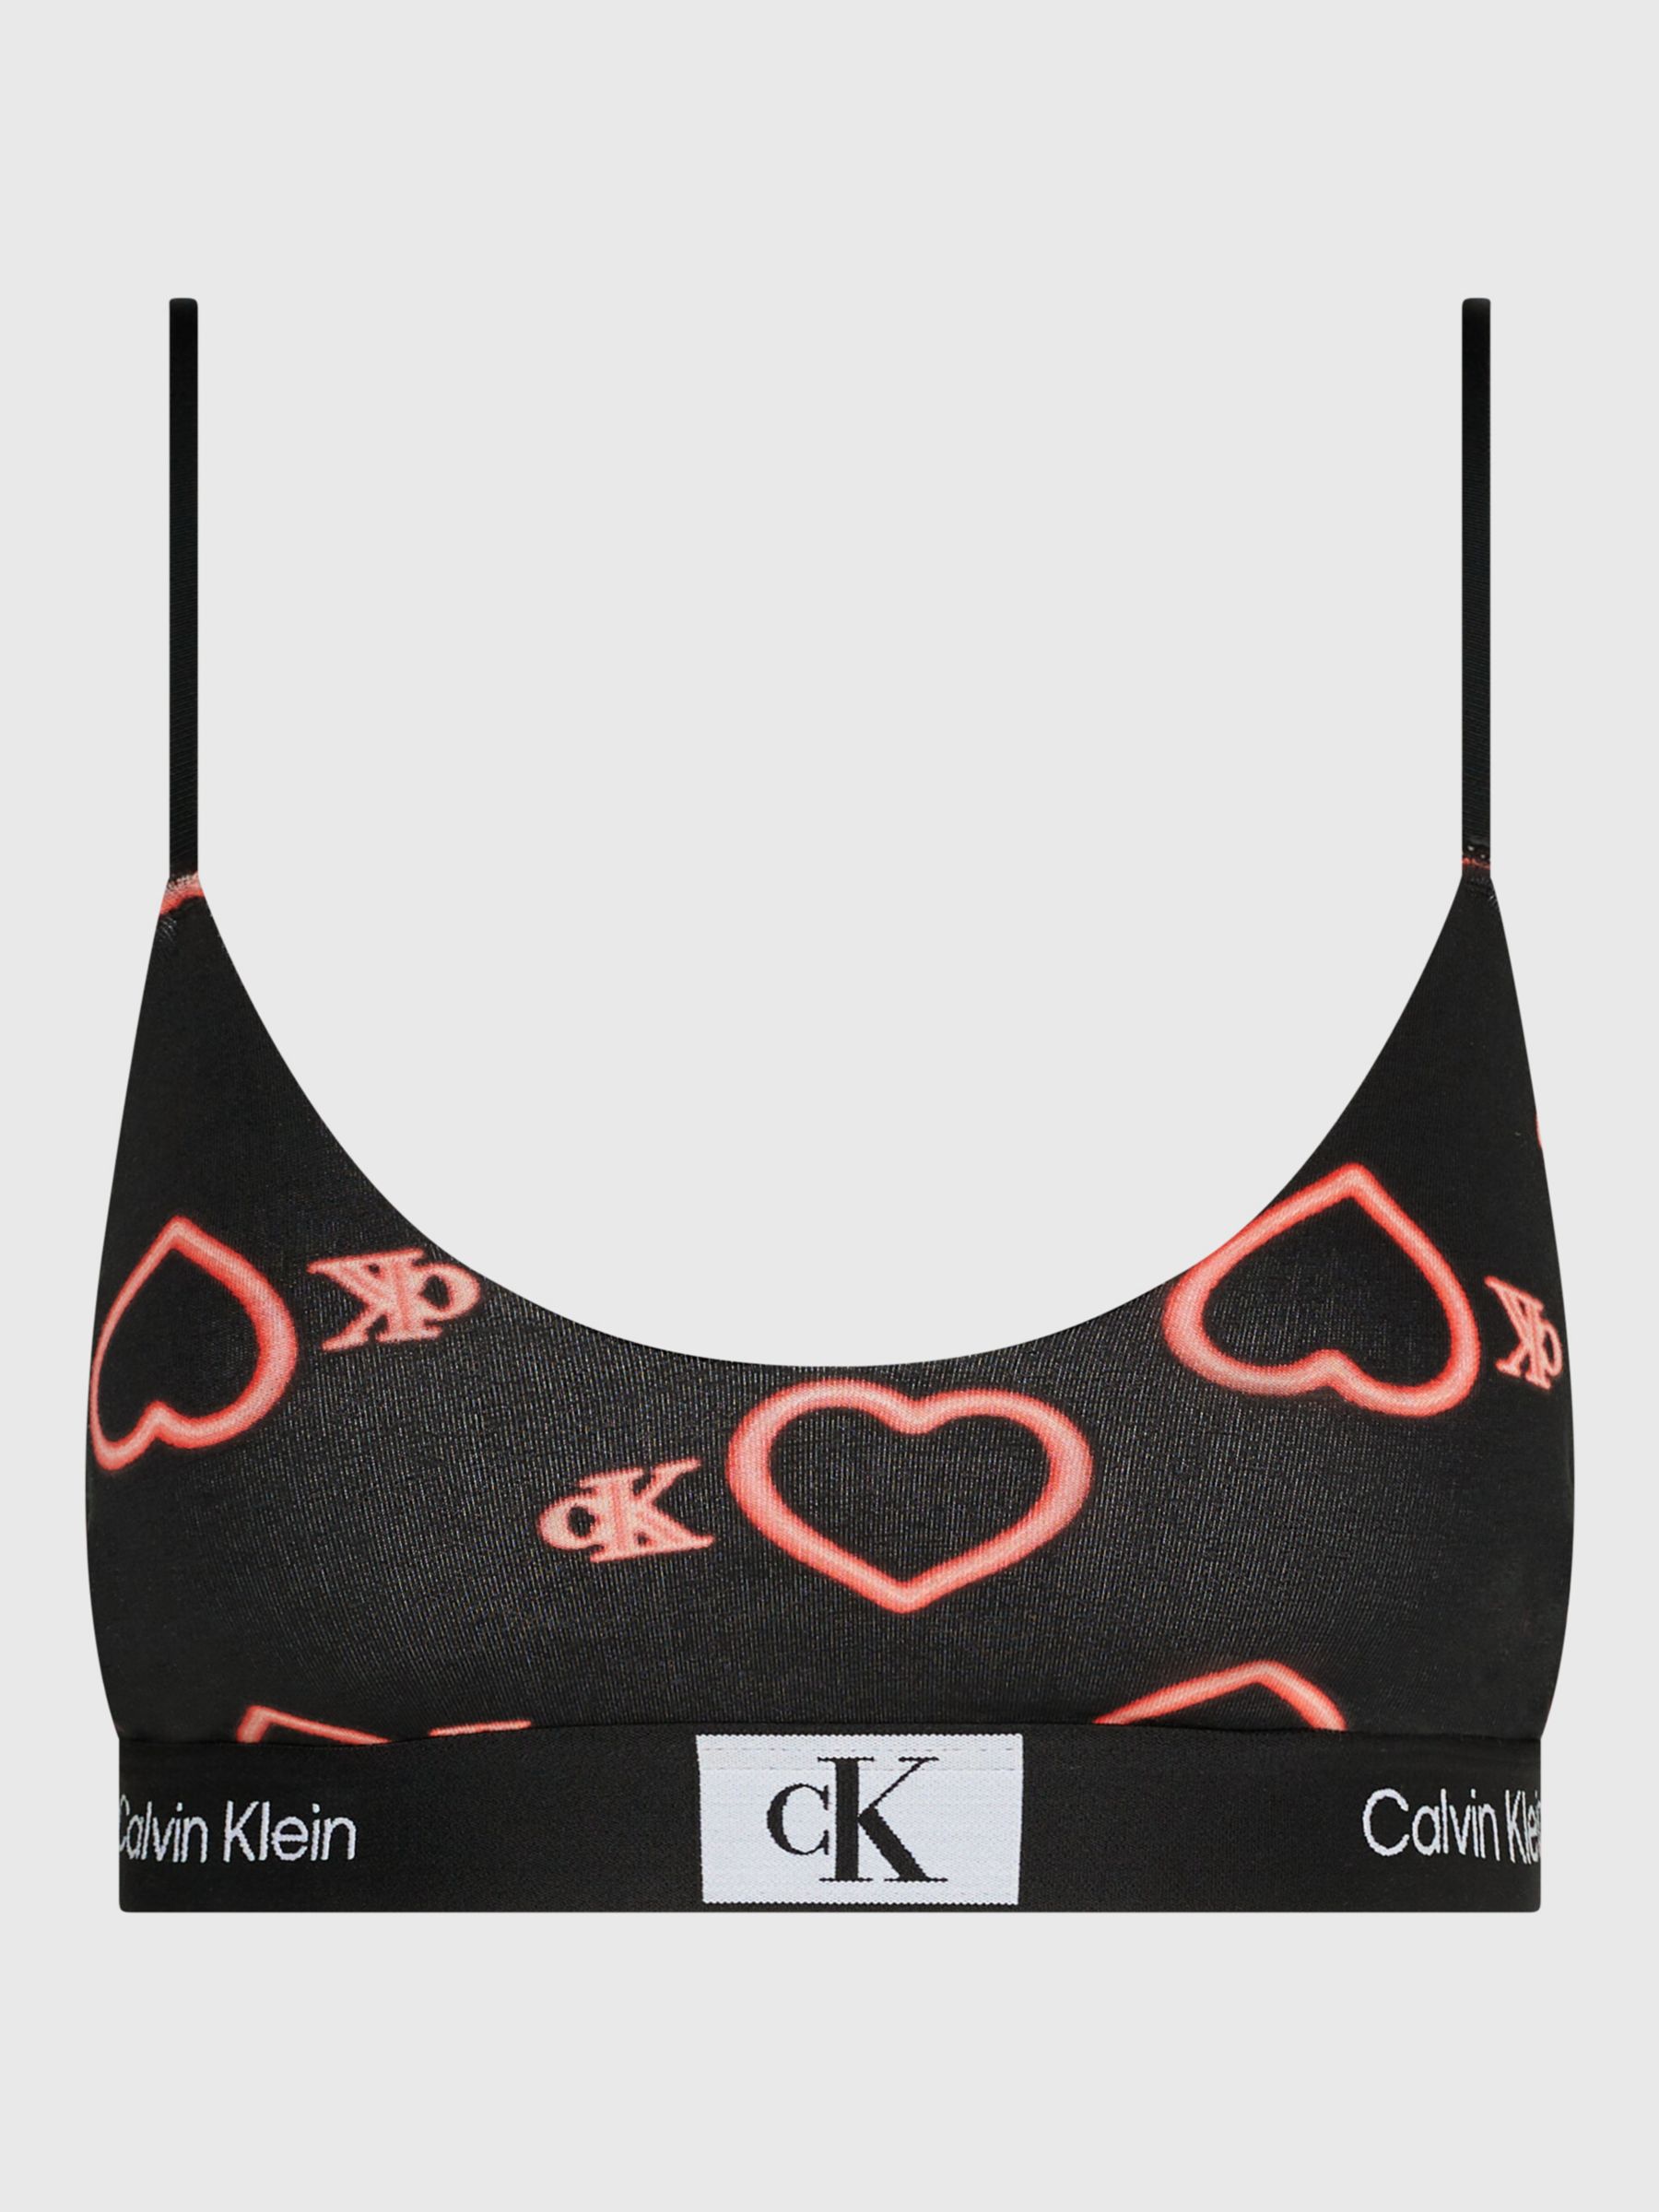 Calvin Klein 1996 Vday Neon Hearts Bralette, Black, XS